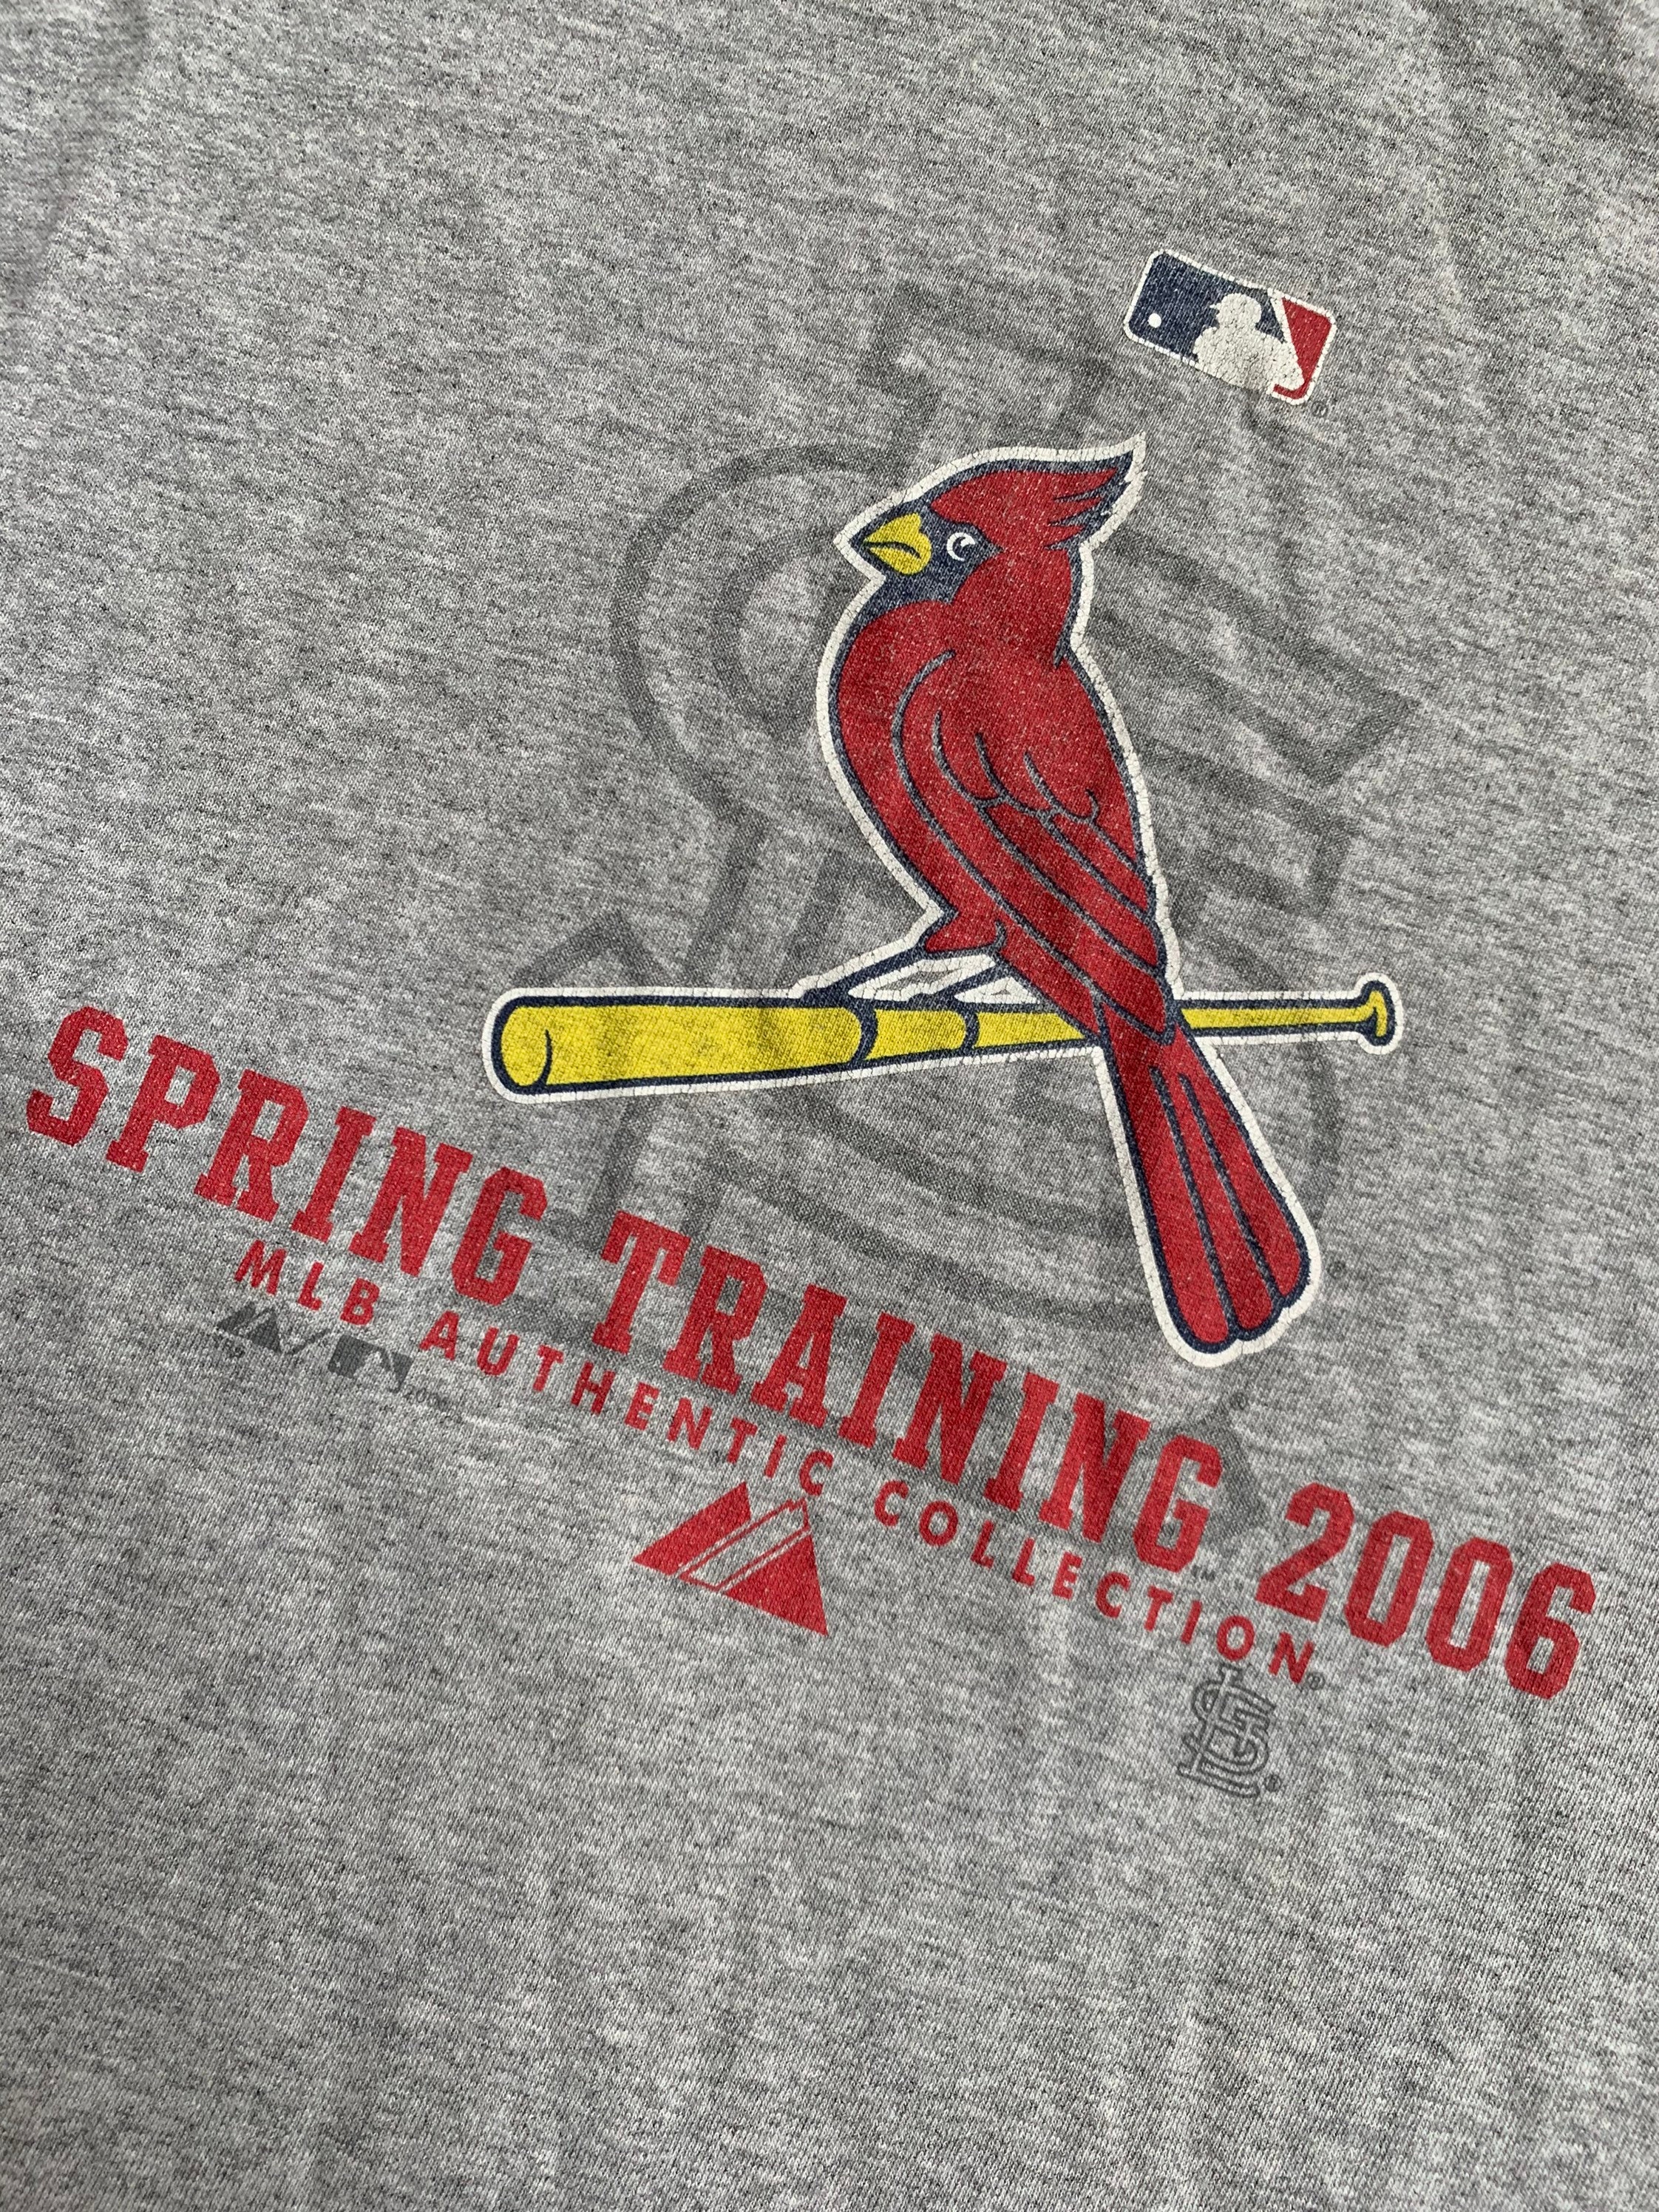 2006 St Louis Cardinals Spring Training T Shirt Nice Fade Size Large